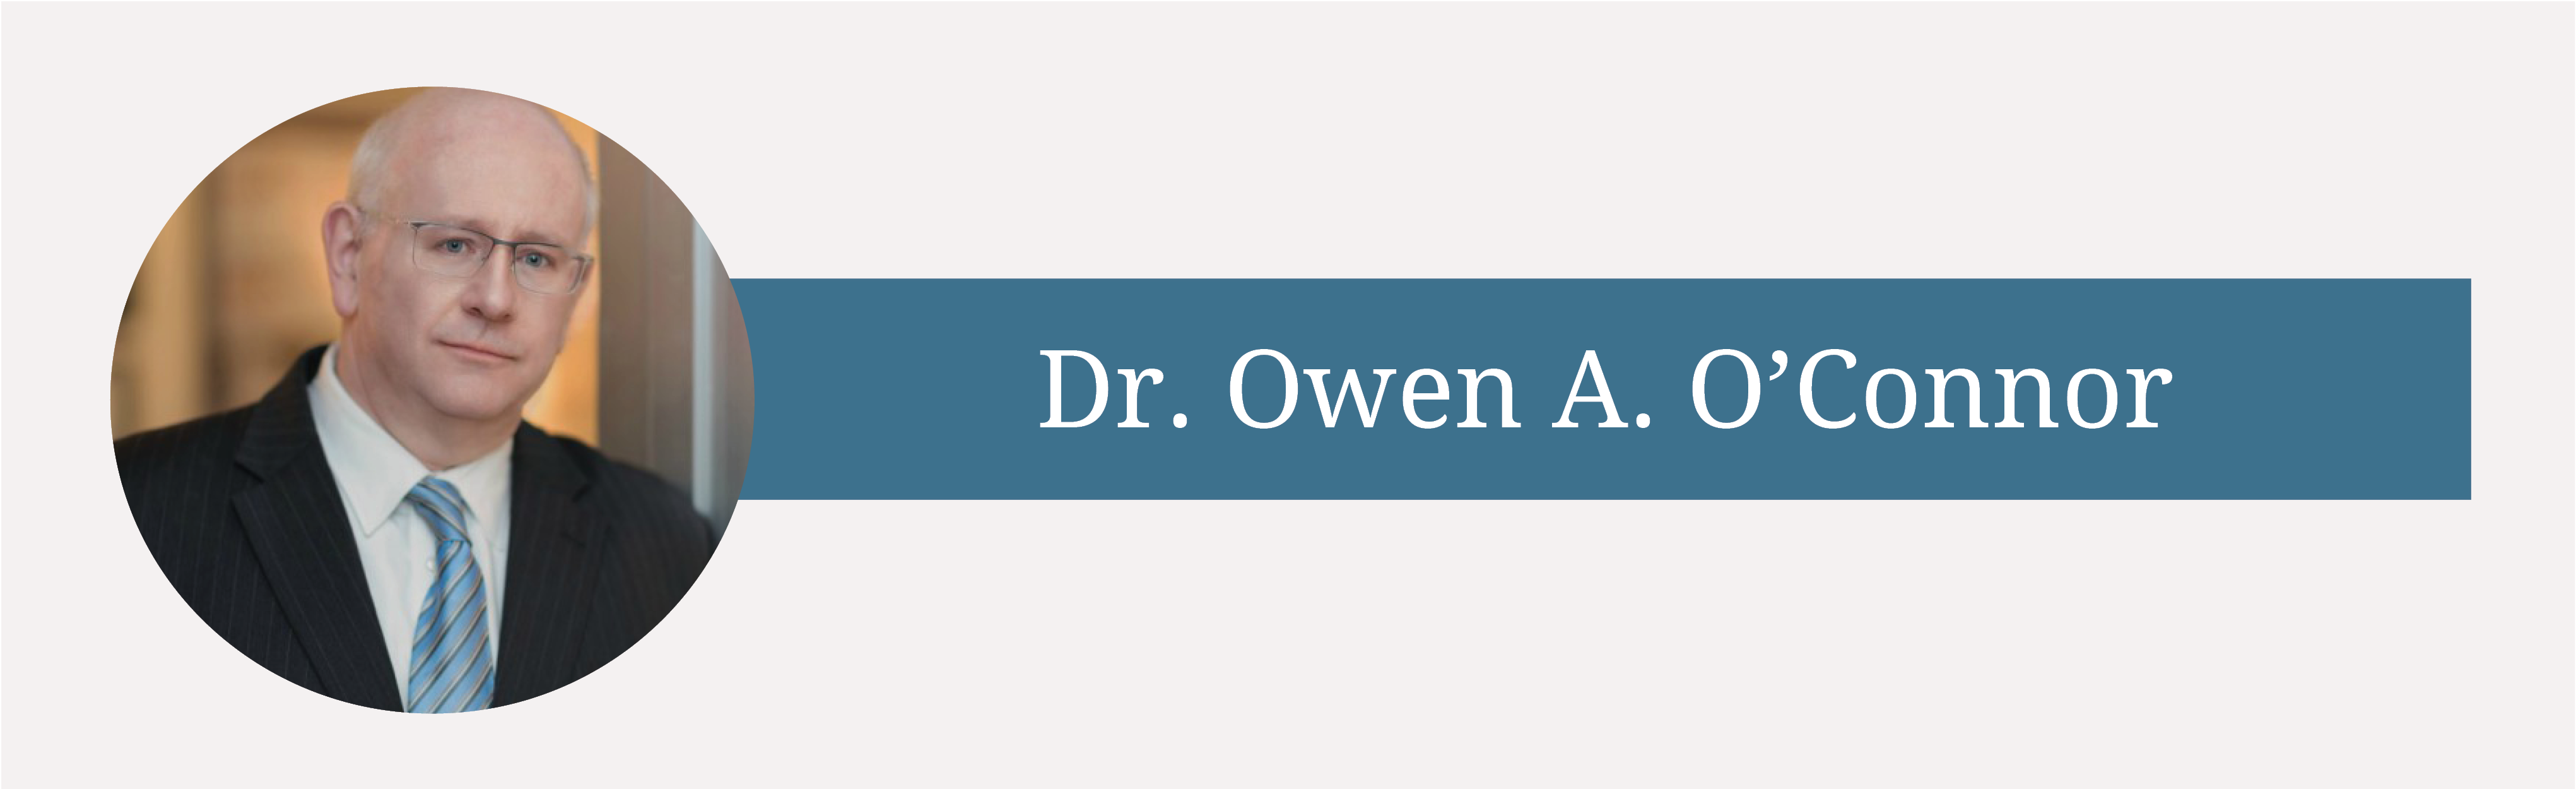 Owen A. O’Connor, MD, Ph.D. Joins White Plains Hospital Physician Associates